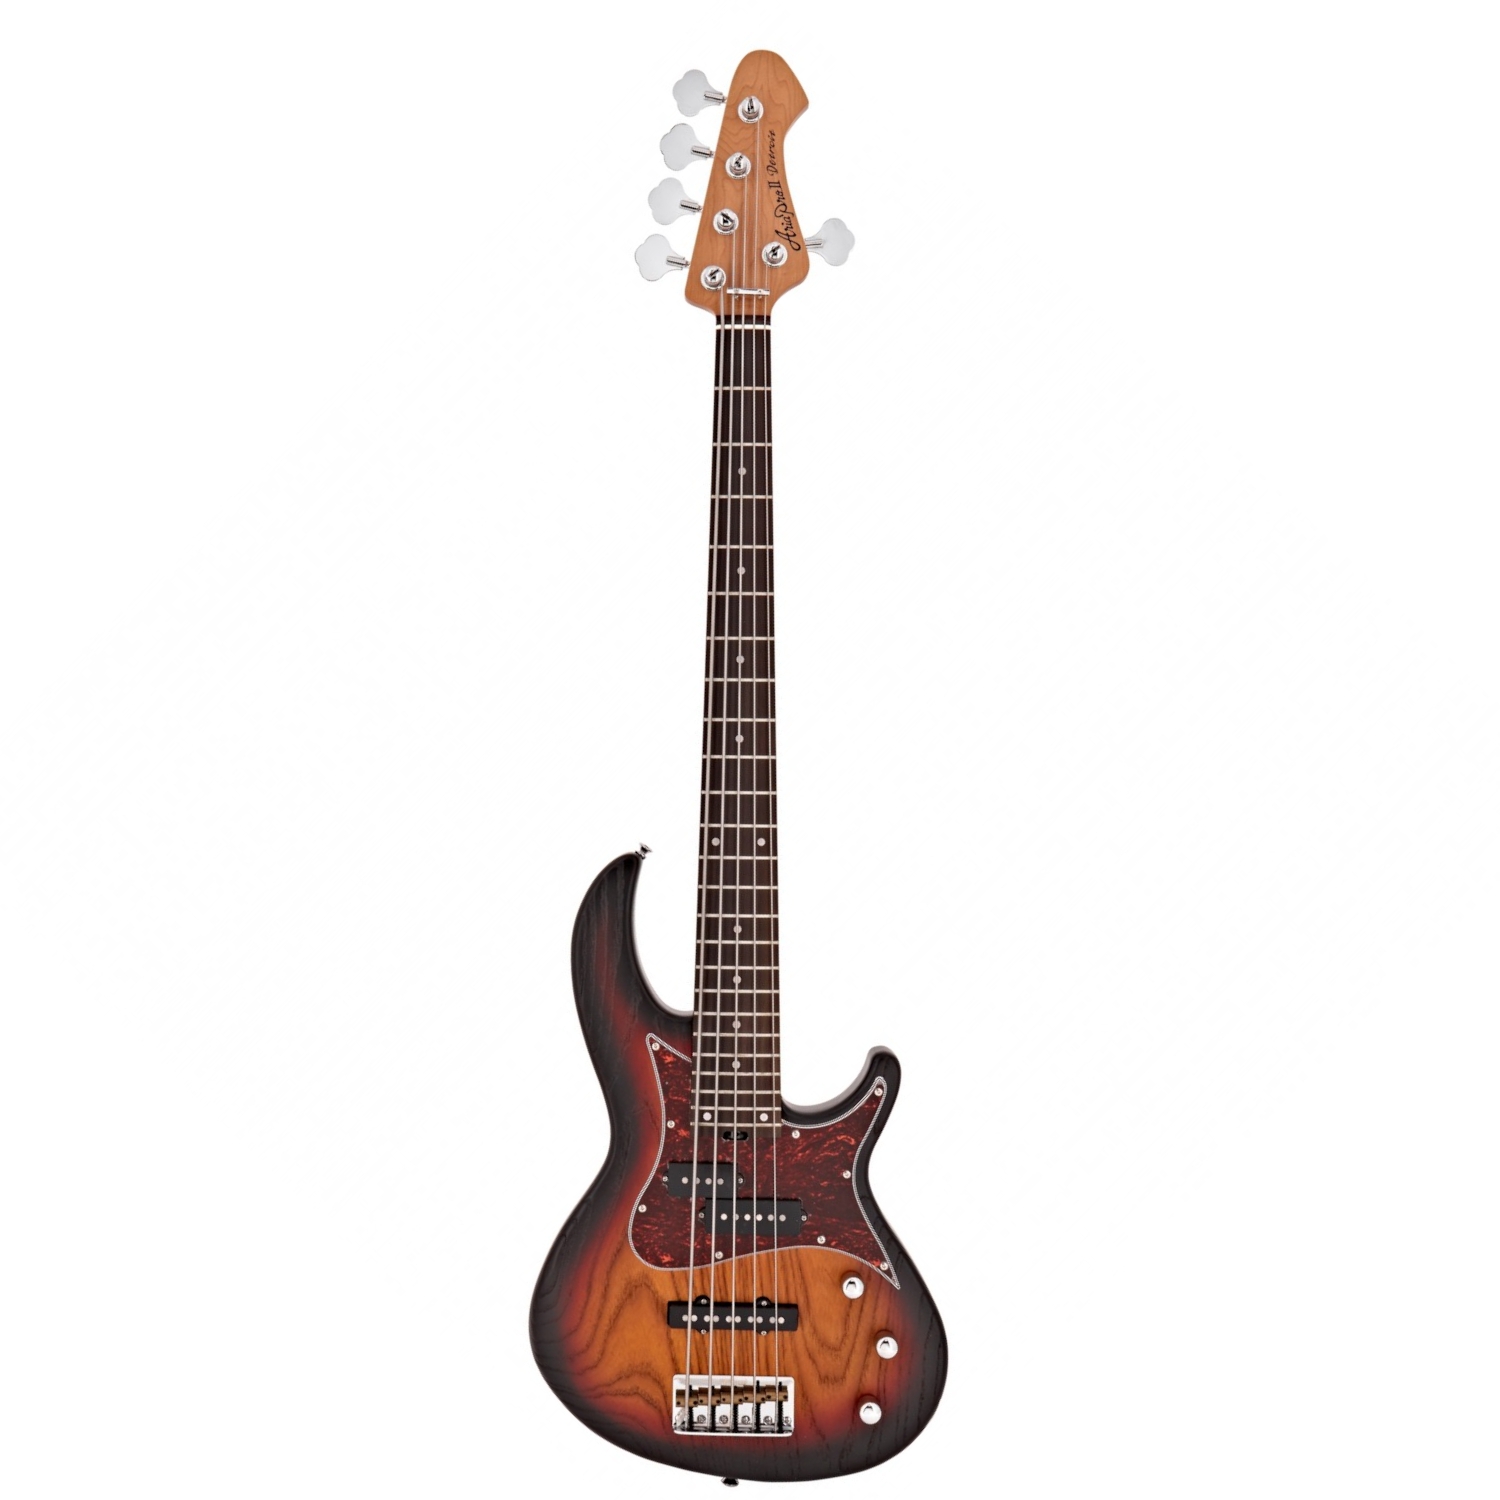 Бас-гитара ARIA 313-MK2/5 OPSB